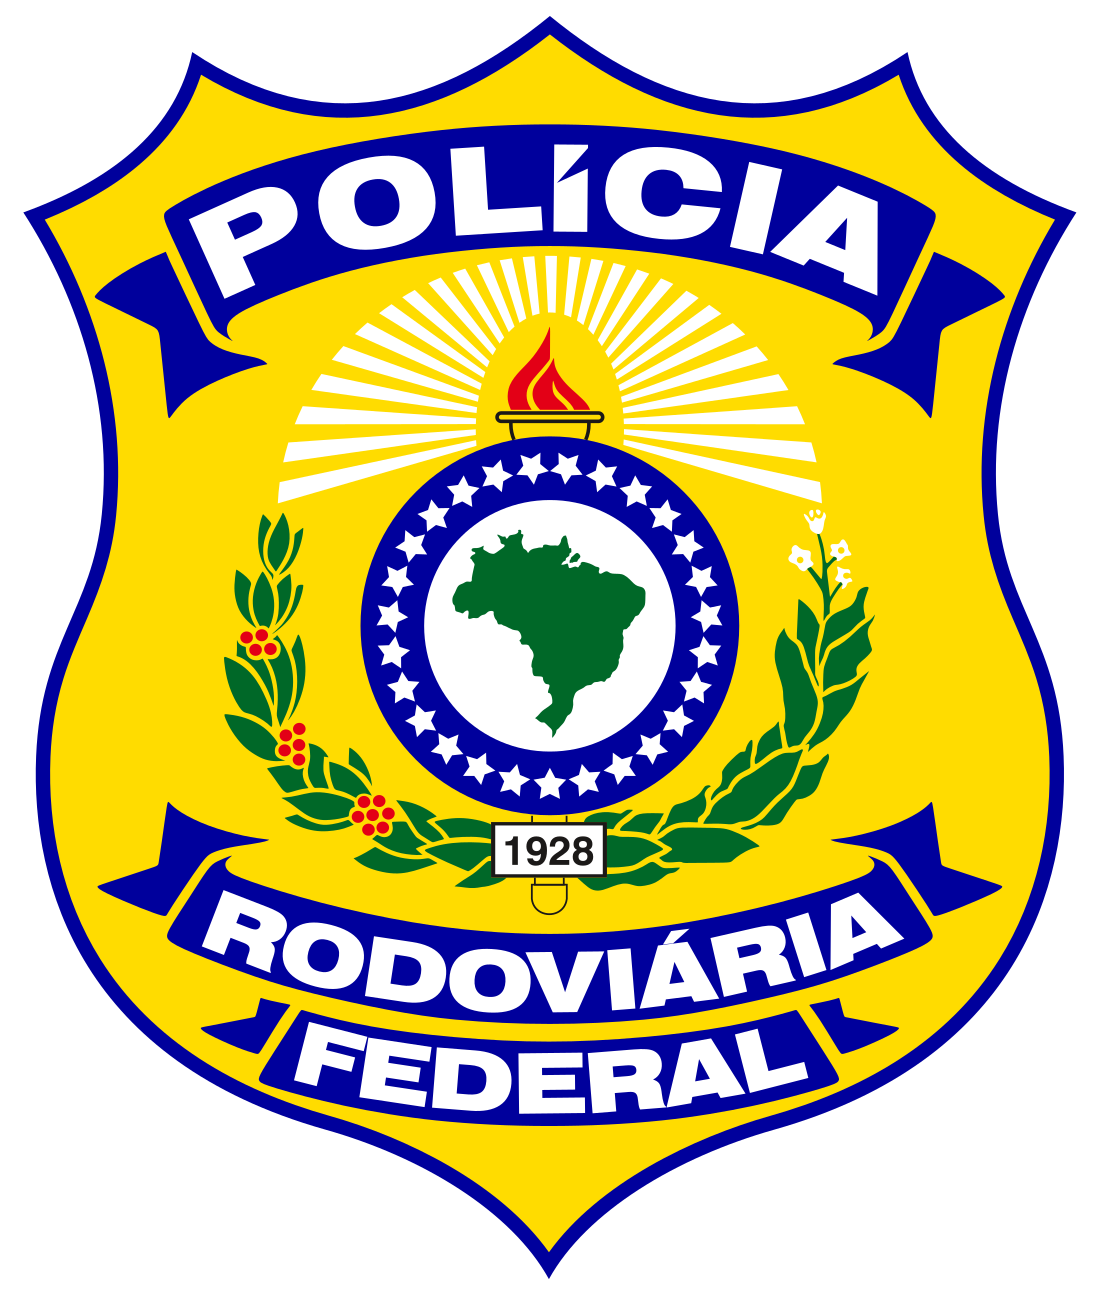 Policia rodoviária federal logo.